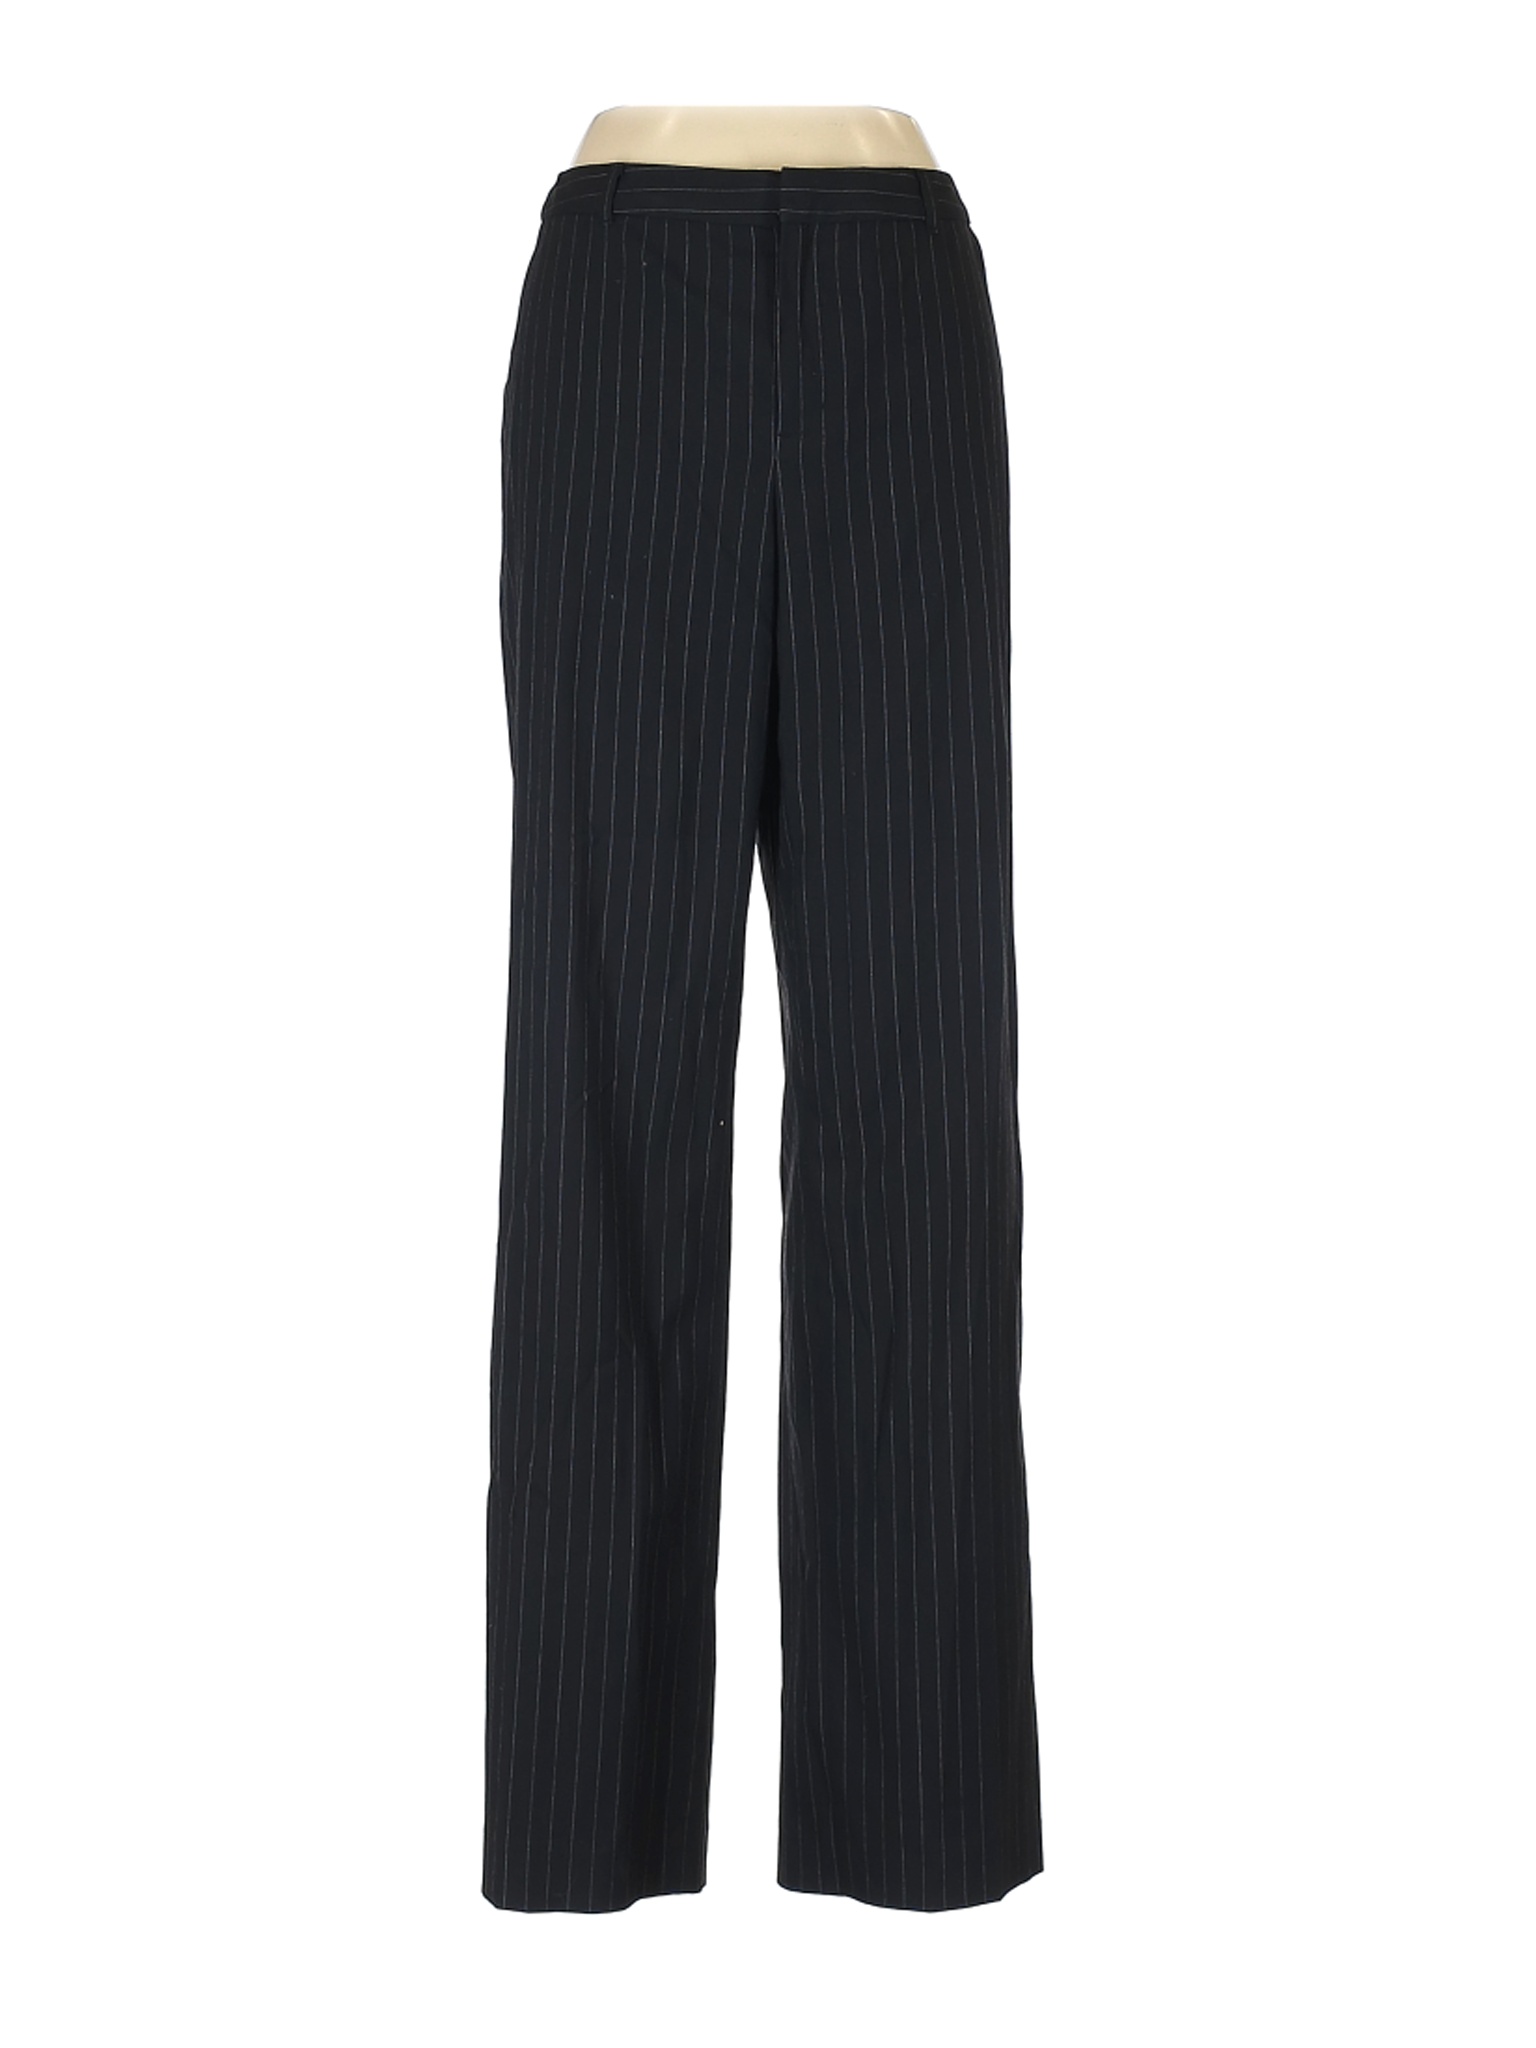 Liz Claiborne Women Black Dress Pants 8 | eBay